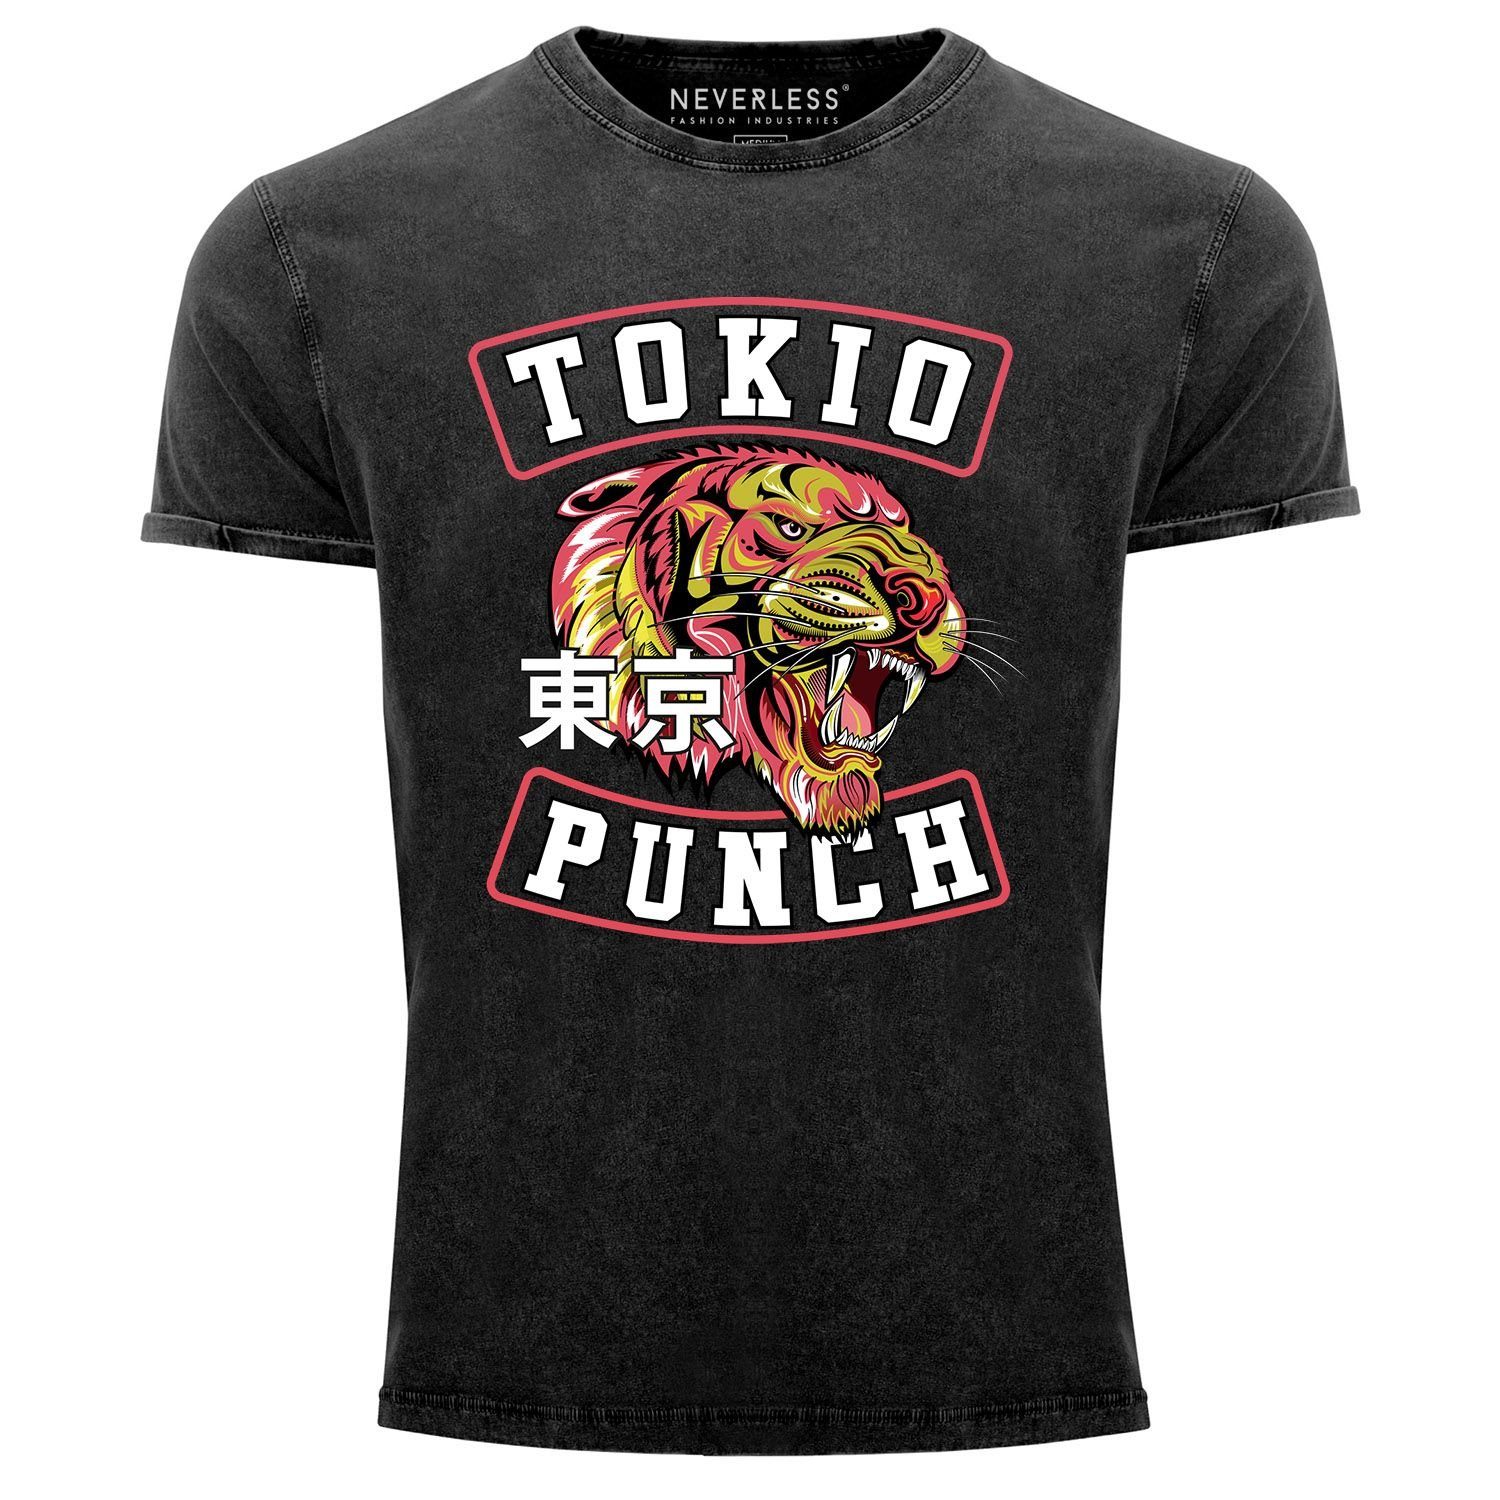 Print Style Tattoo Print T-Shirt Punch Fit Vintage Shirt Neverless® Slim Neverless Used Herren Look mit Schriftzug Print-Shirt Tokio Tigerkopf Printshirt